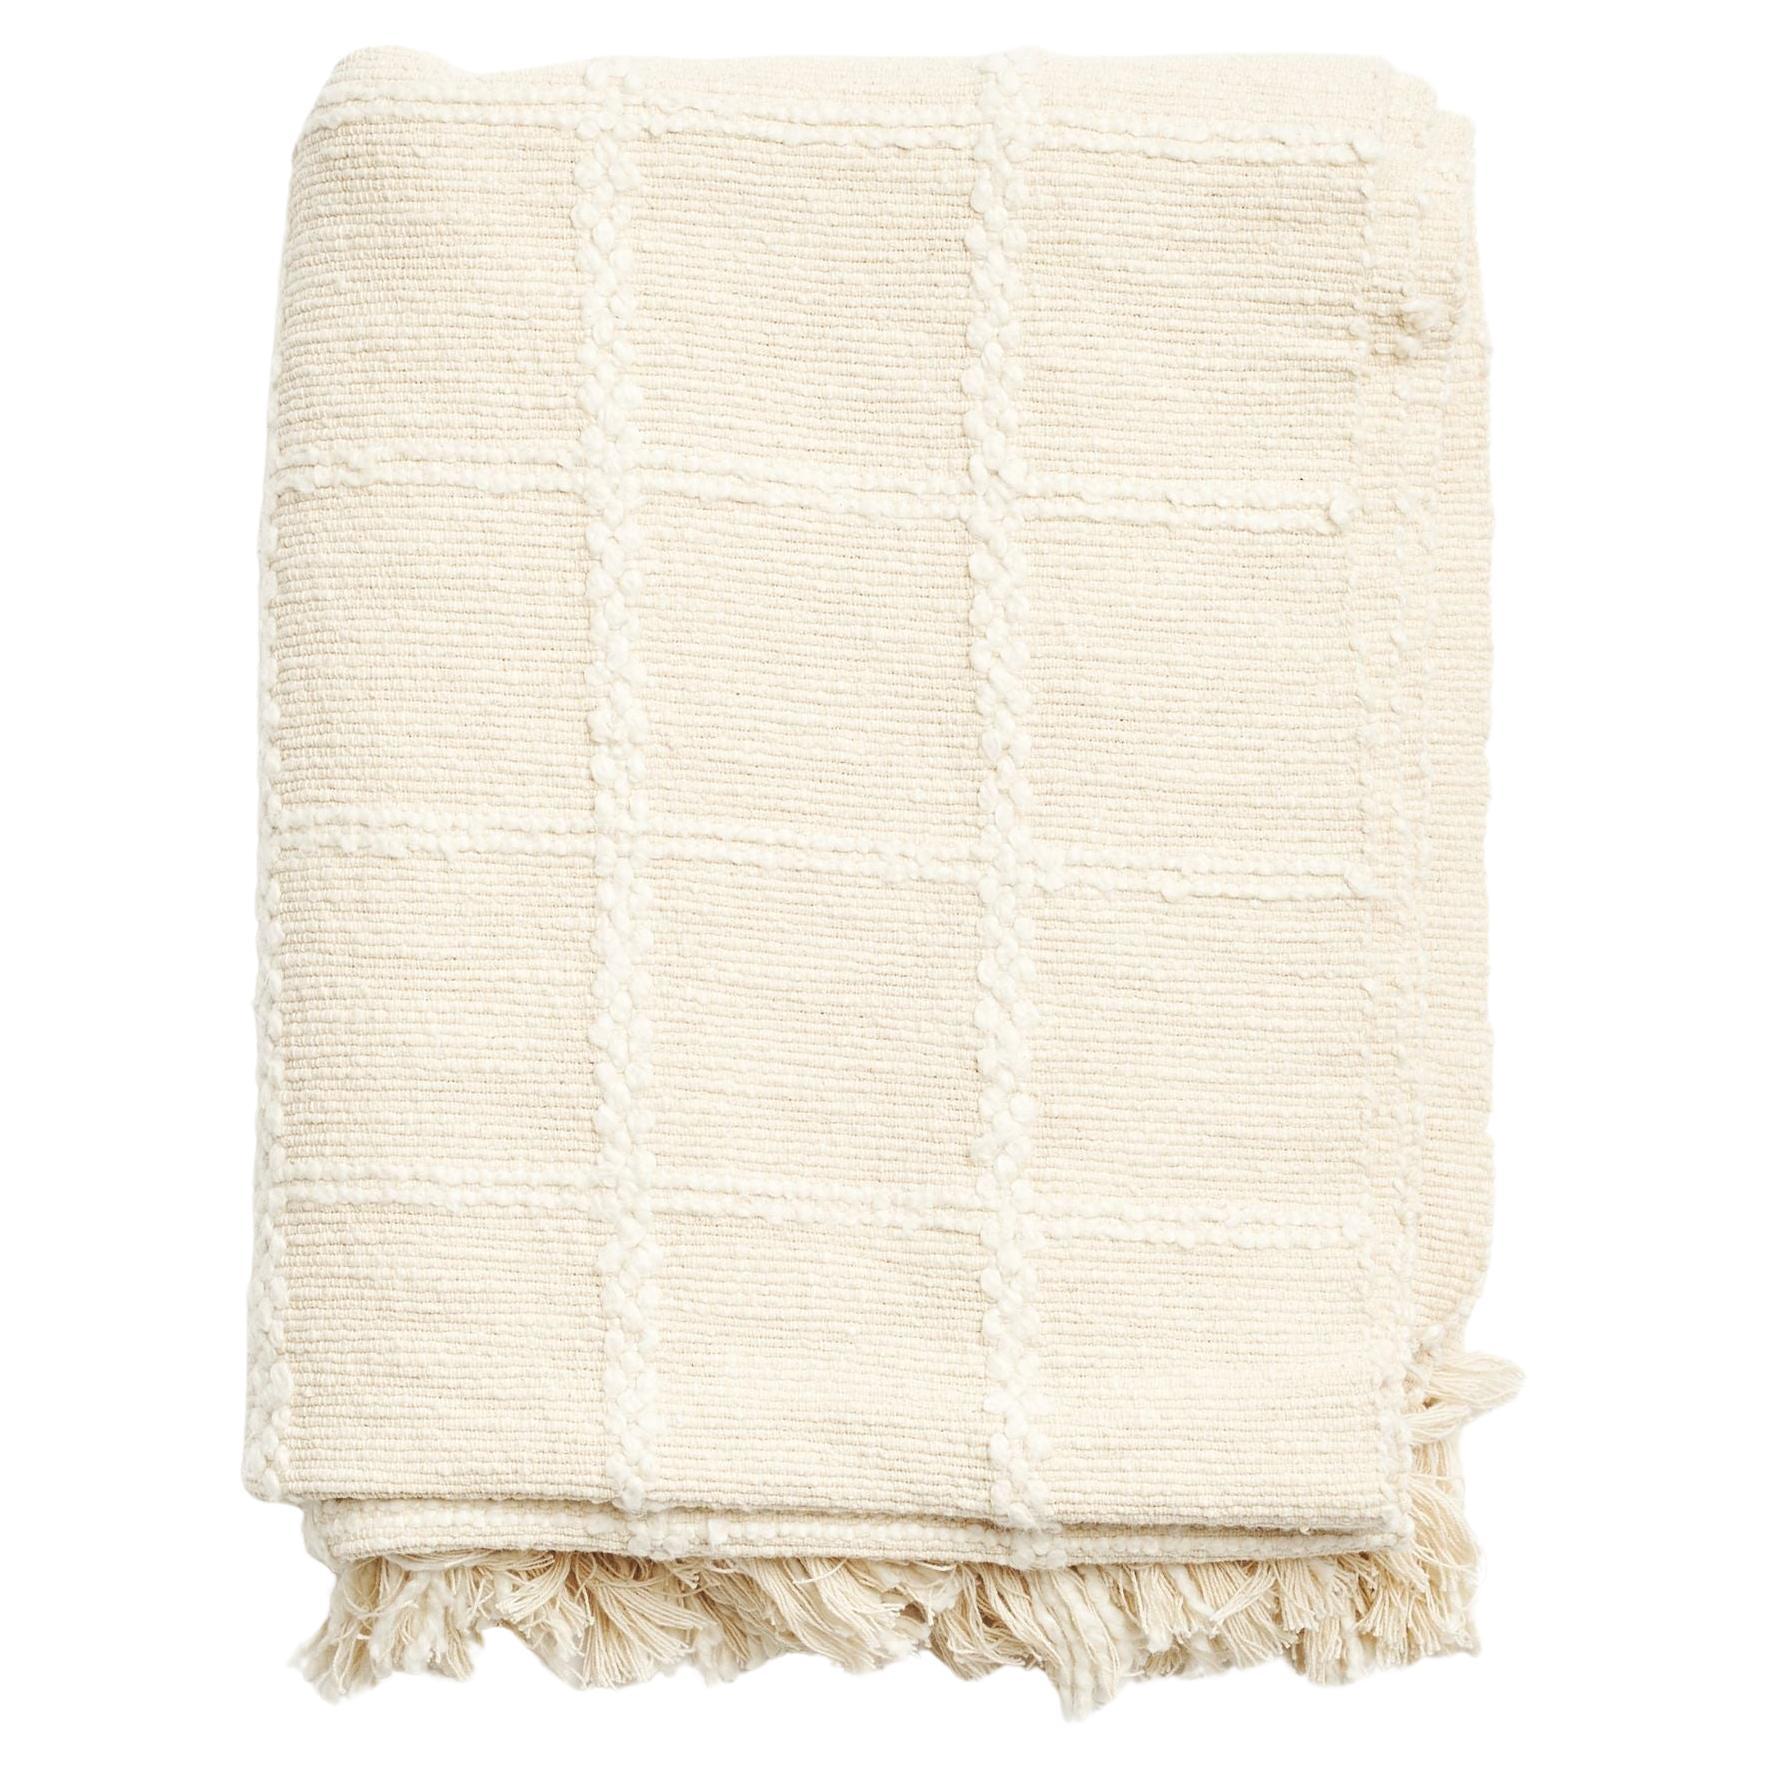 Sea Shell White Textured Weave Pure Cotton Handloom Throw